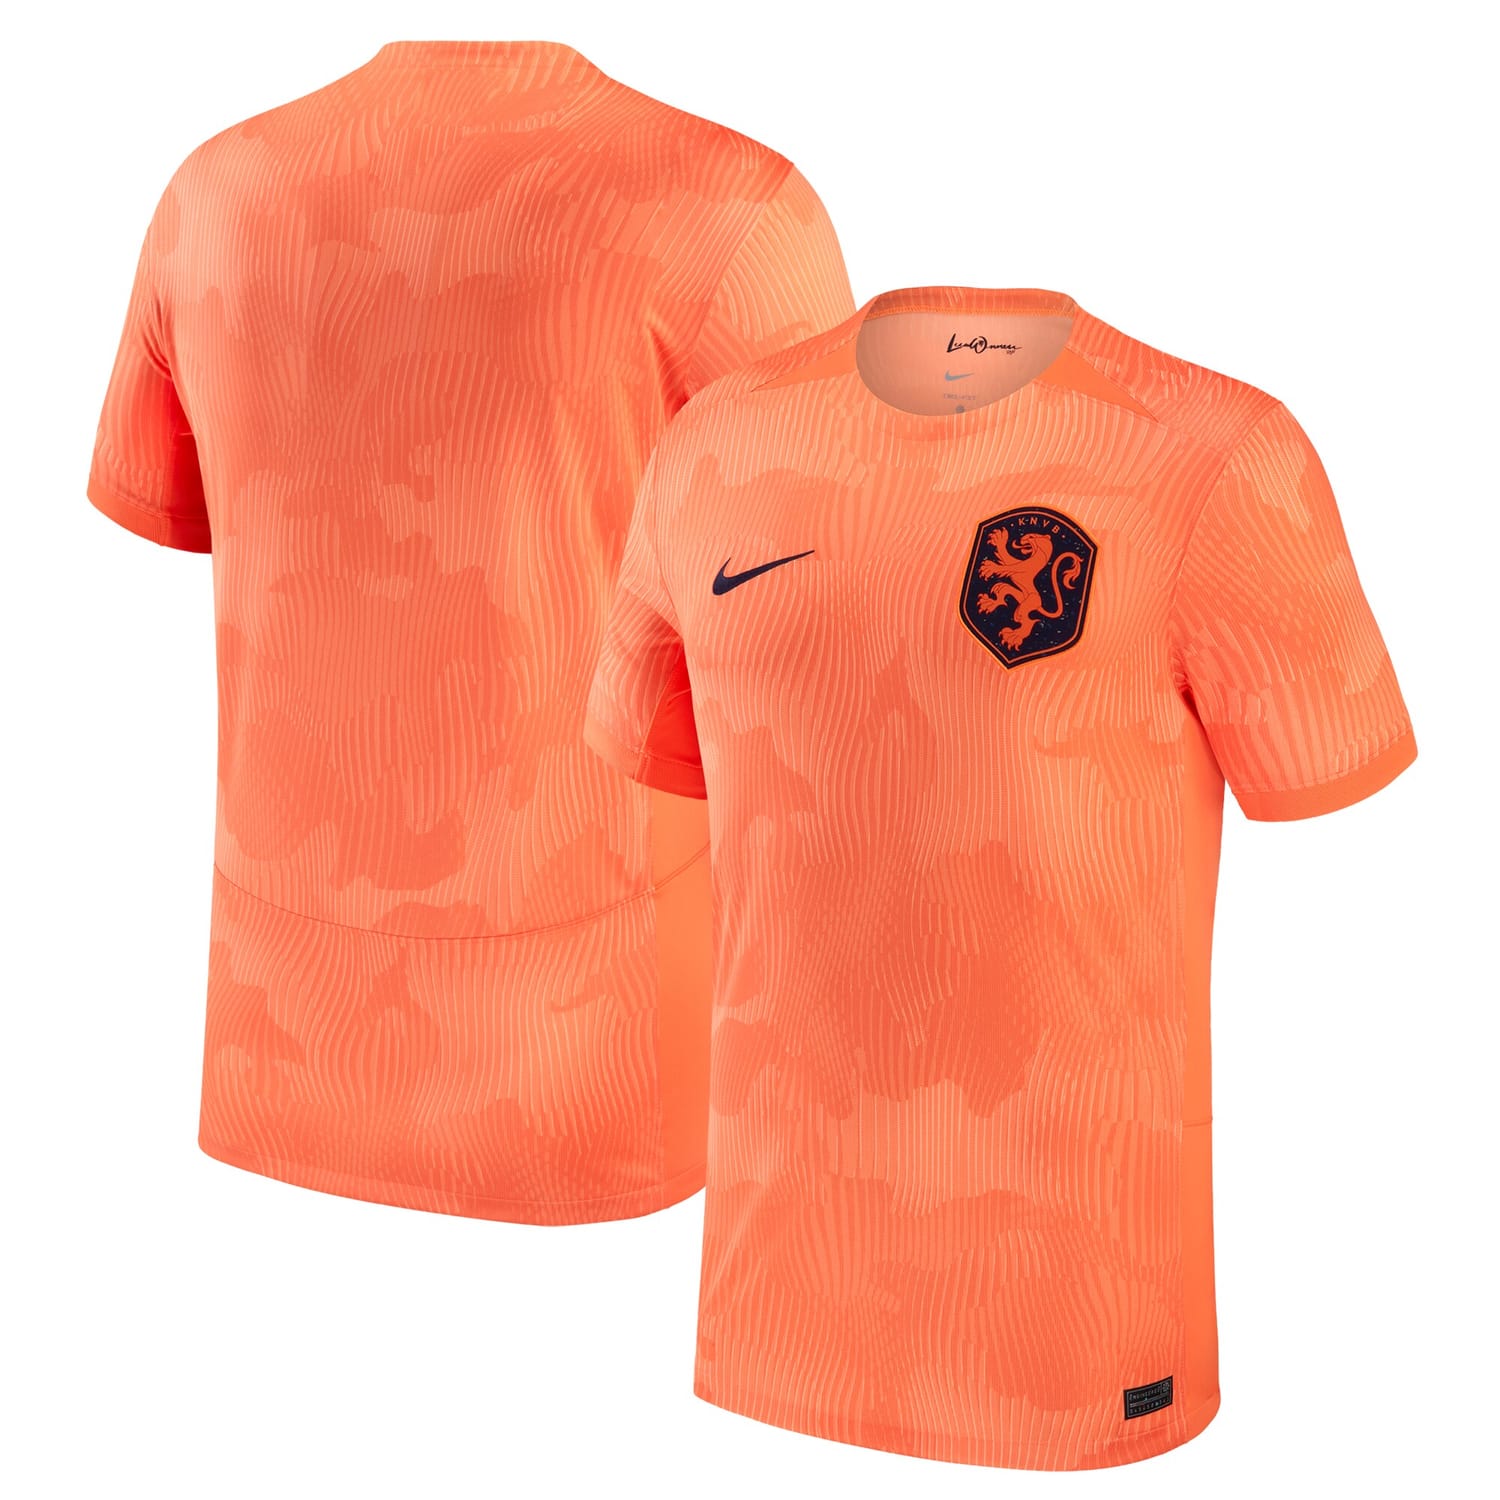 Netherlands Women's National Team Home Jersey Shirt Orange 2023 for Men